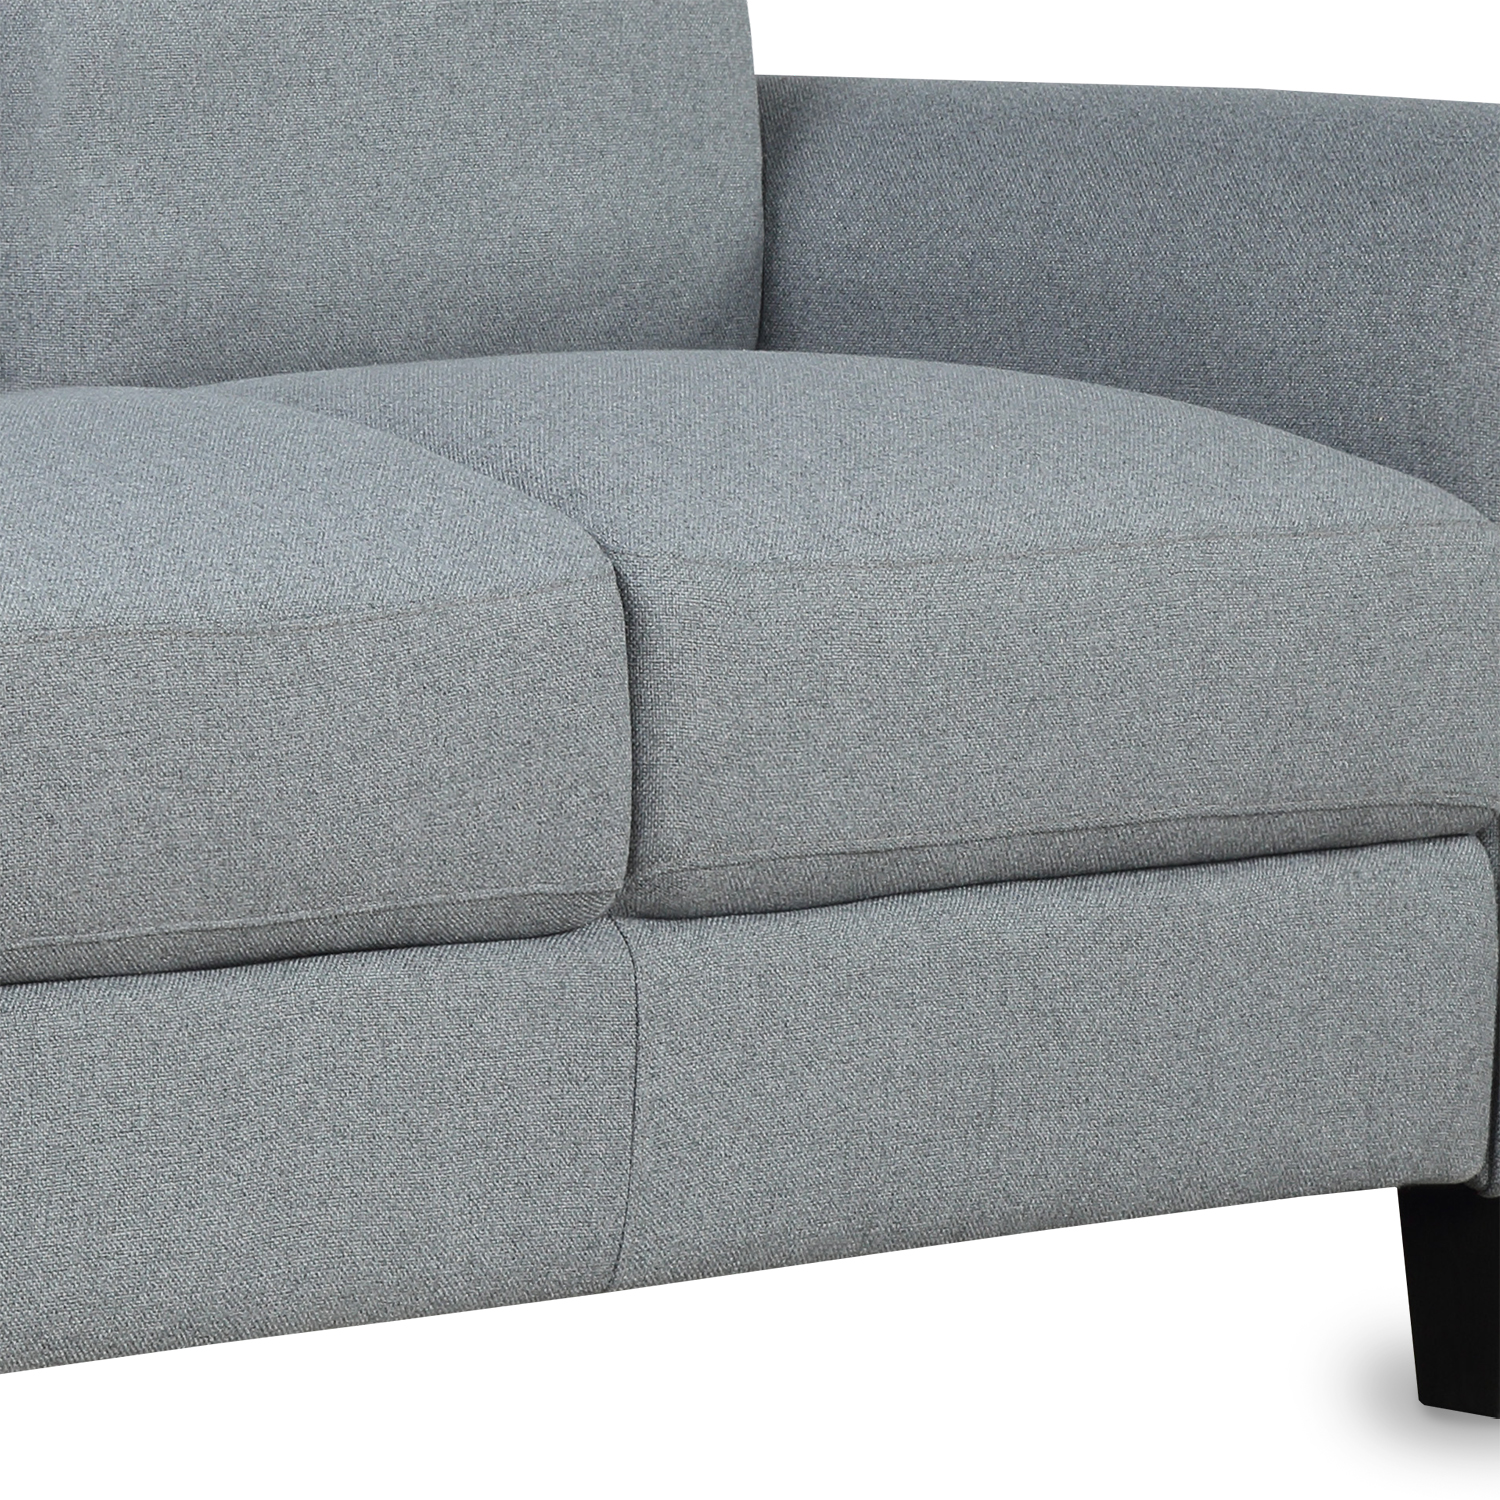 3-Seat Sofa Living Room Linen Fabric Sofa